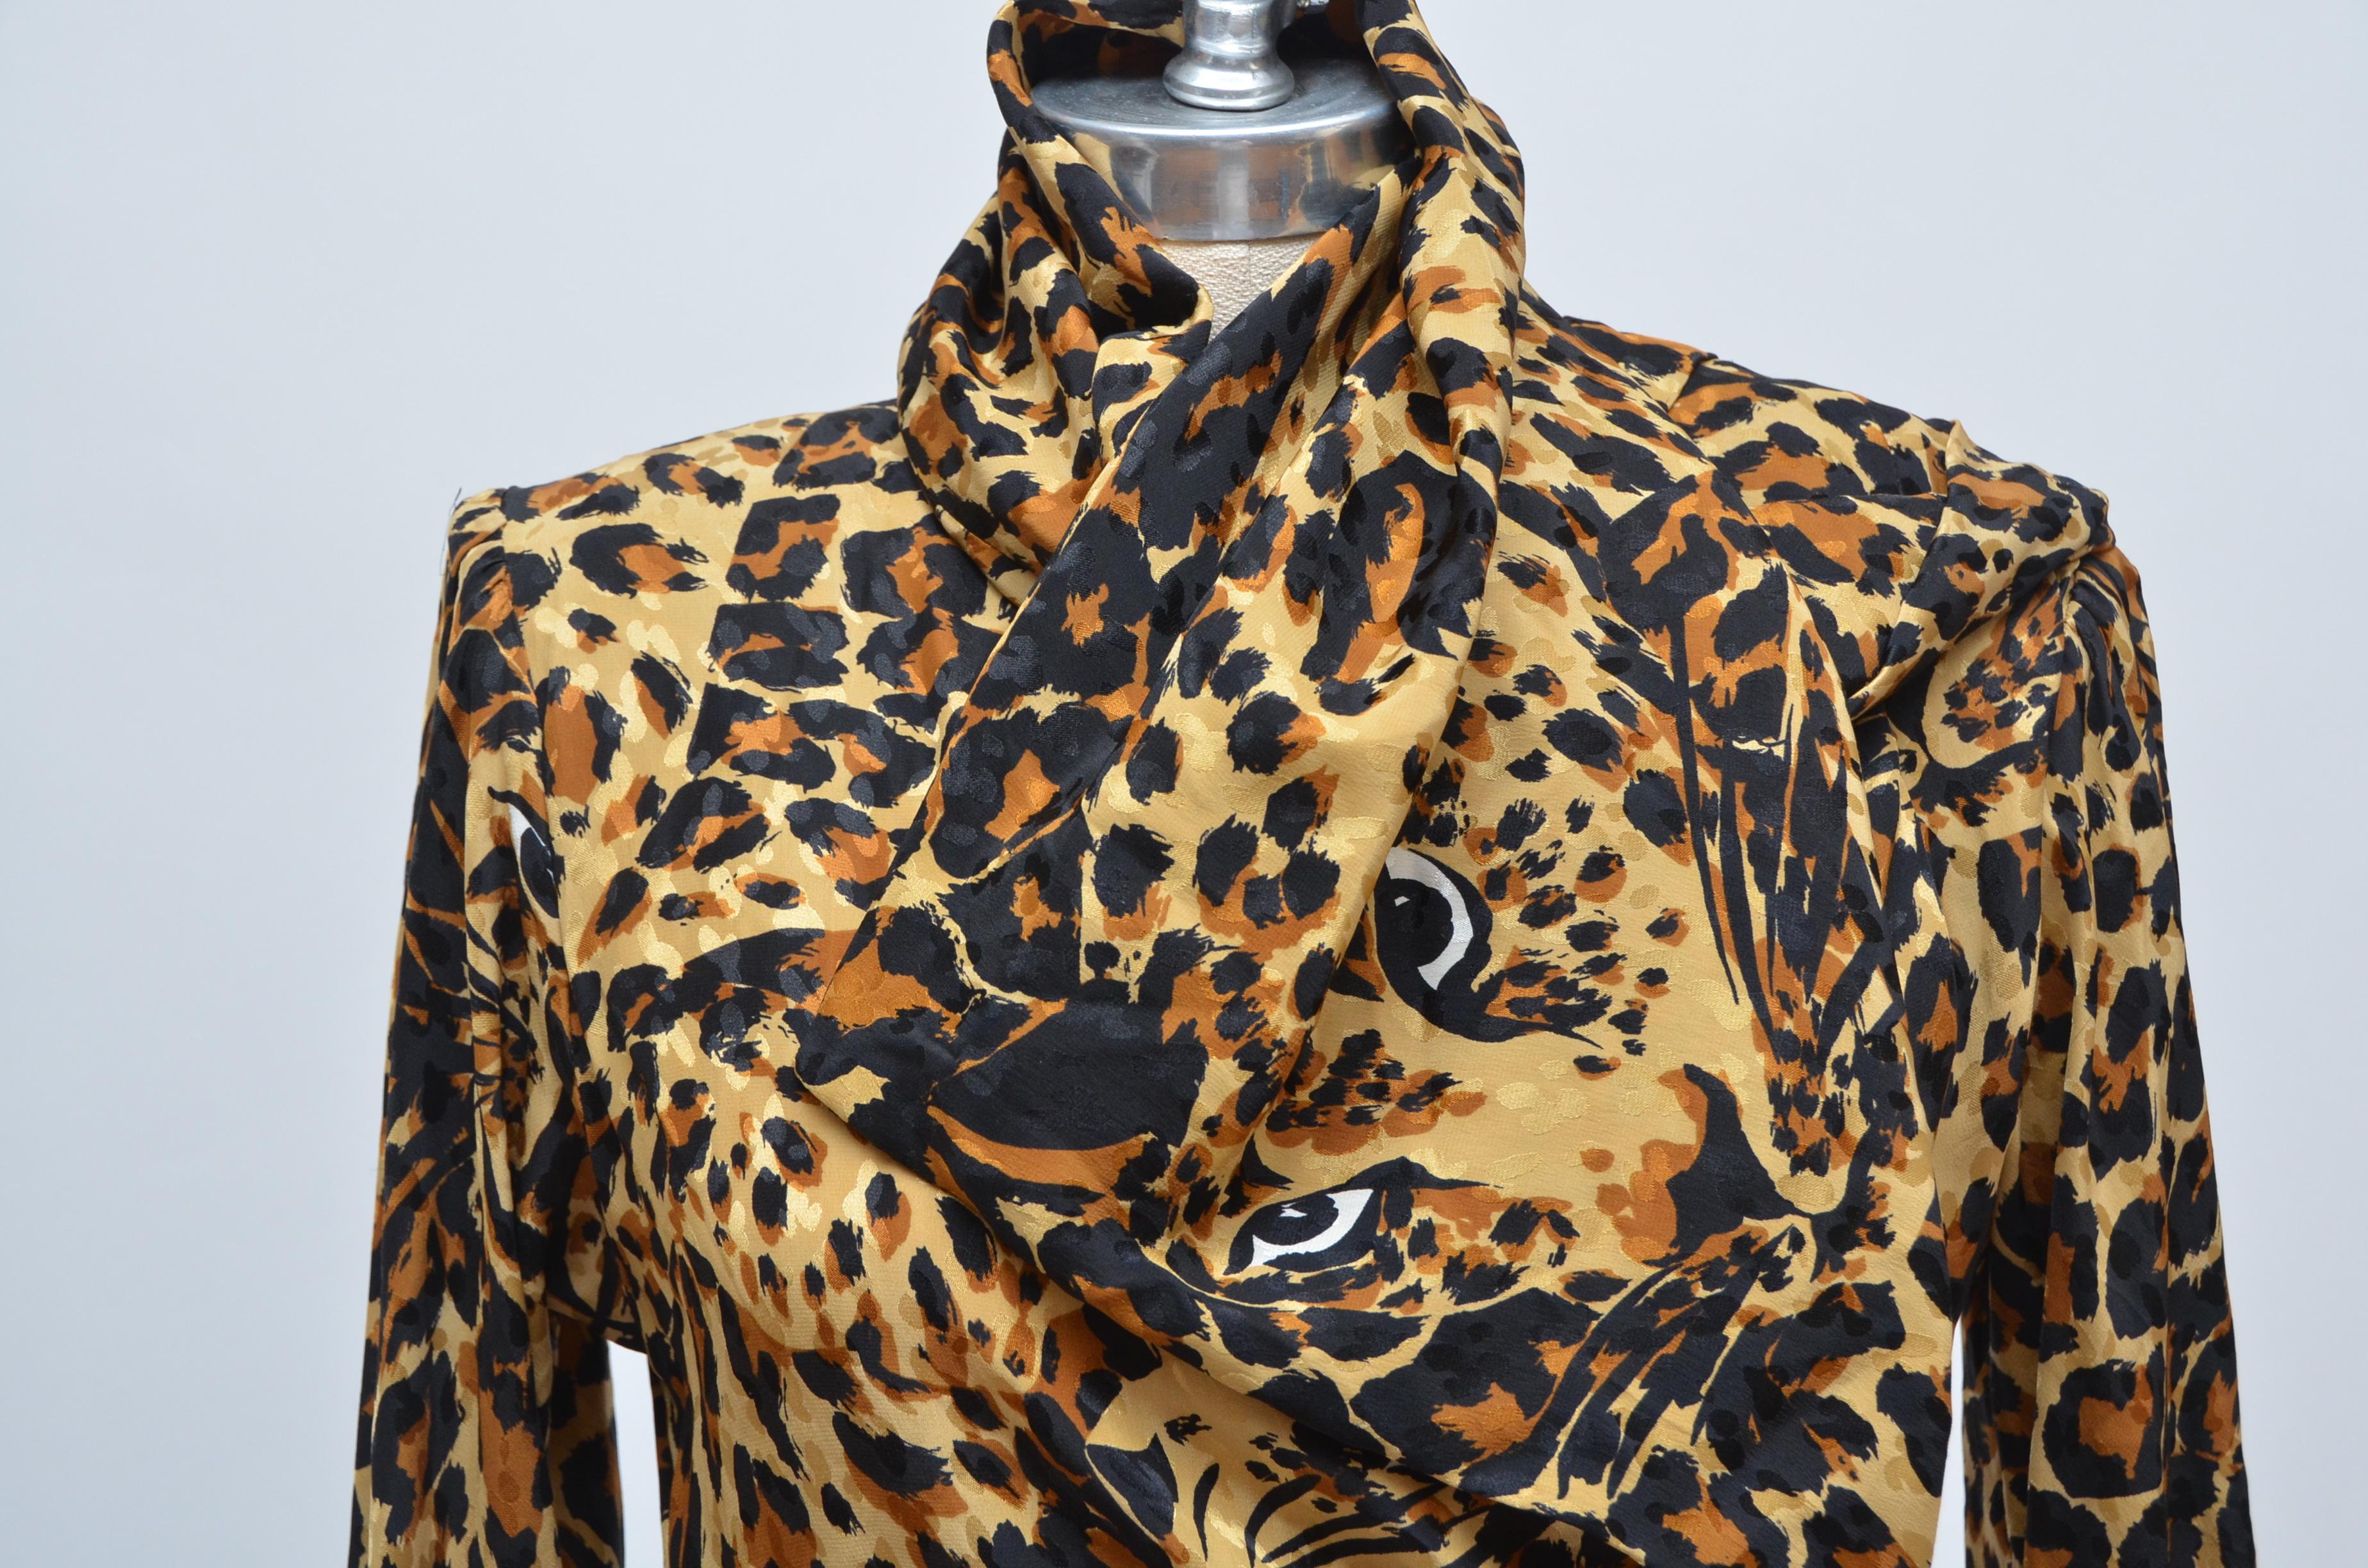 Yves Saint Laurent Rive Gauche Cheetah Silk Dress, 1980s NEW With Tags 2